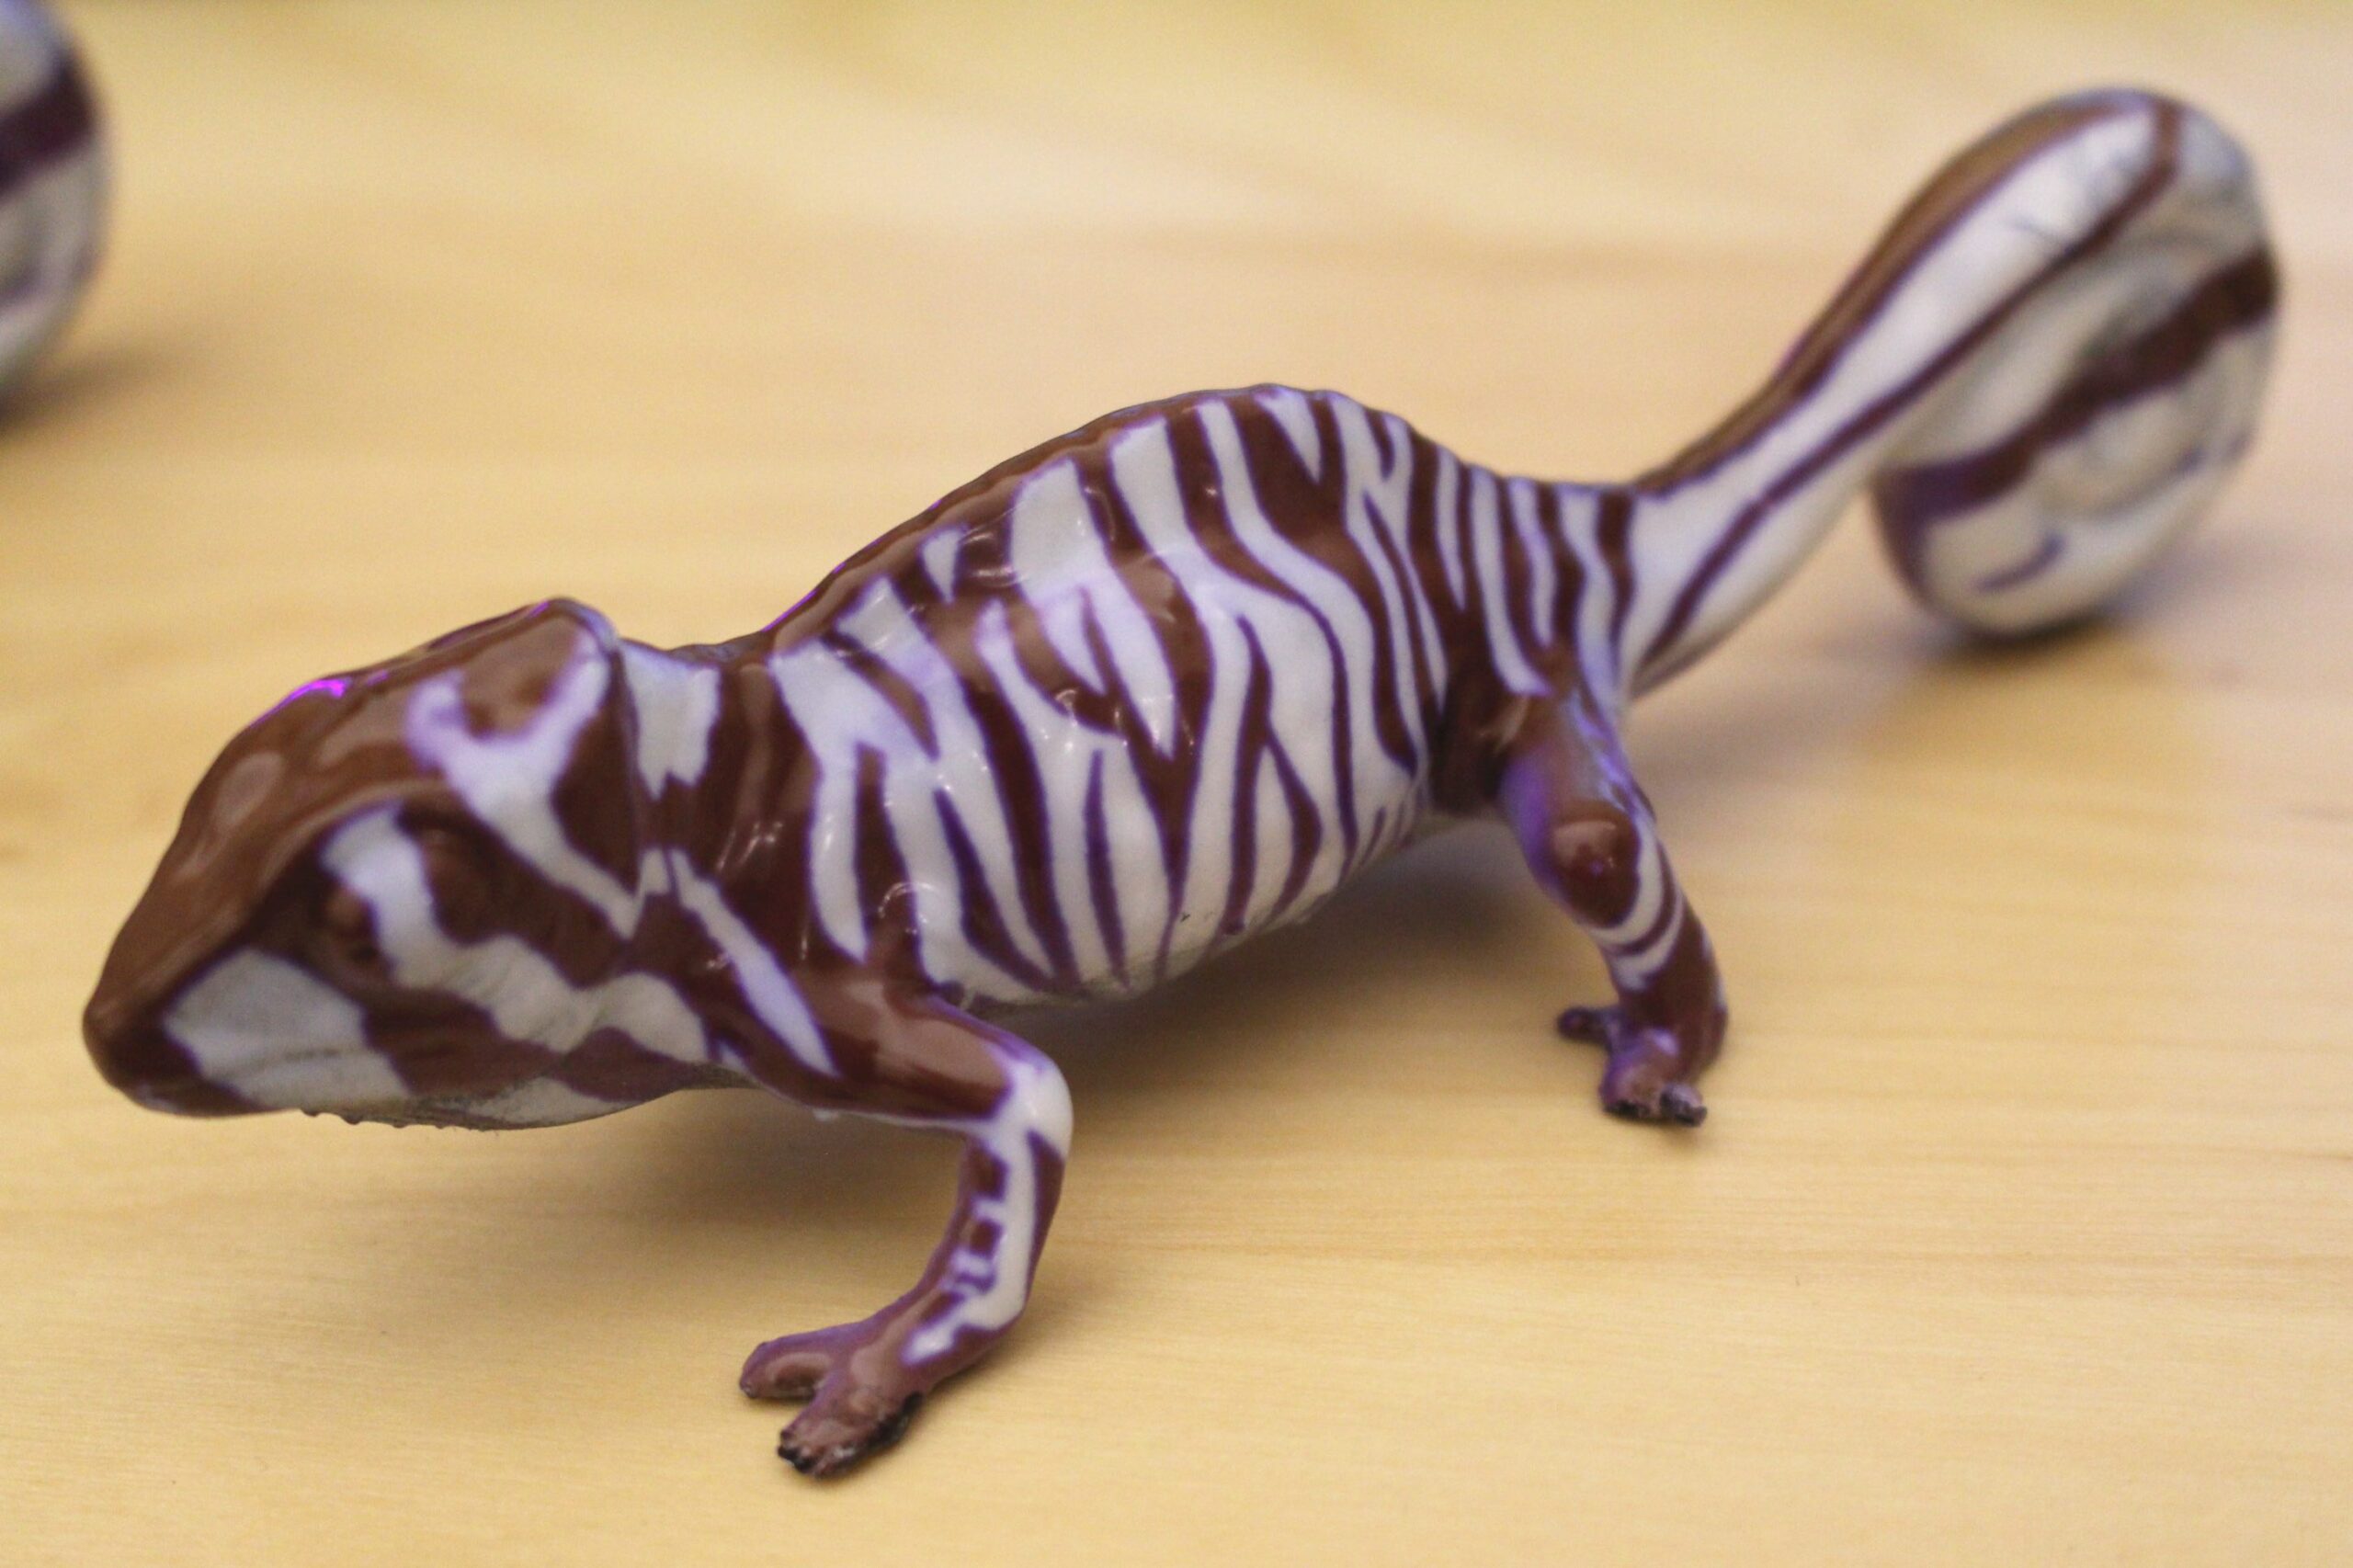 unlit chameleon model with zebra stripes